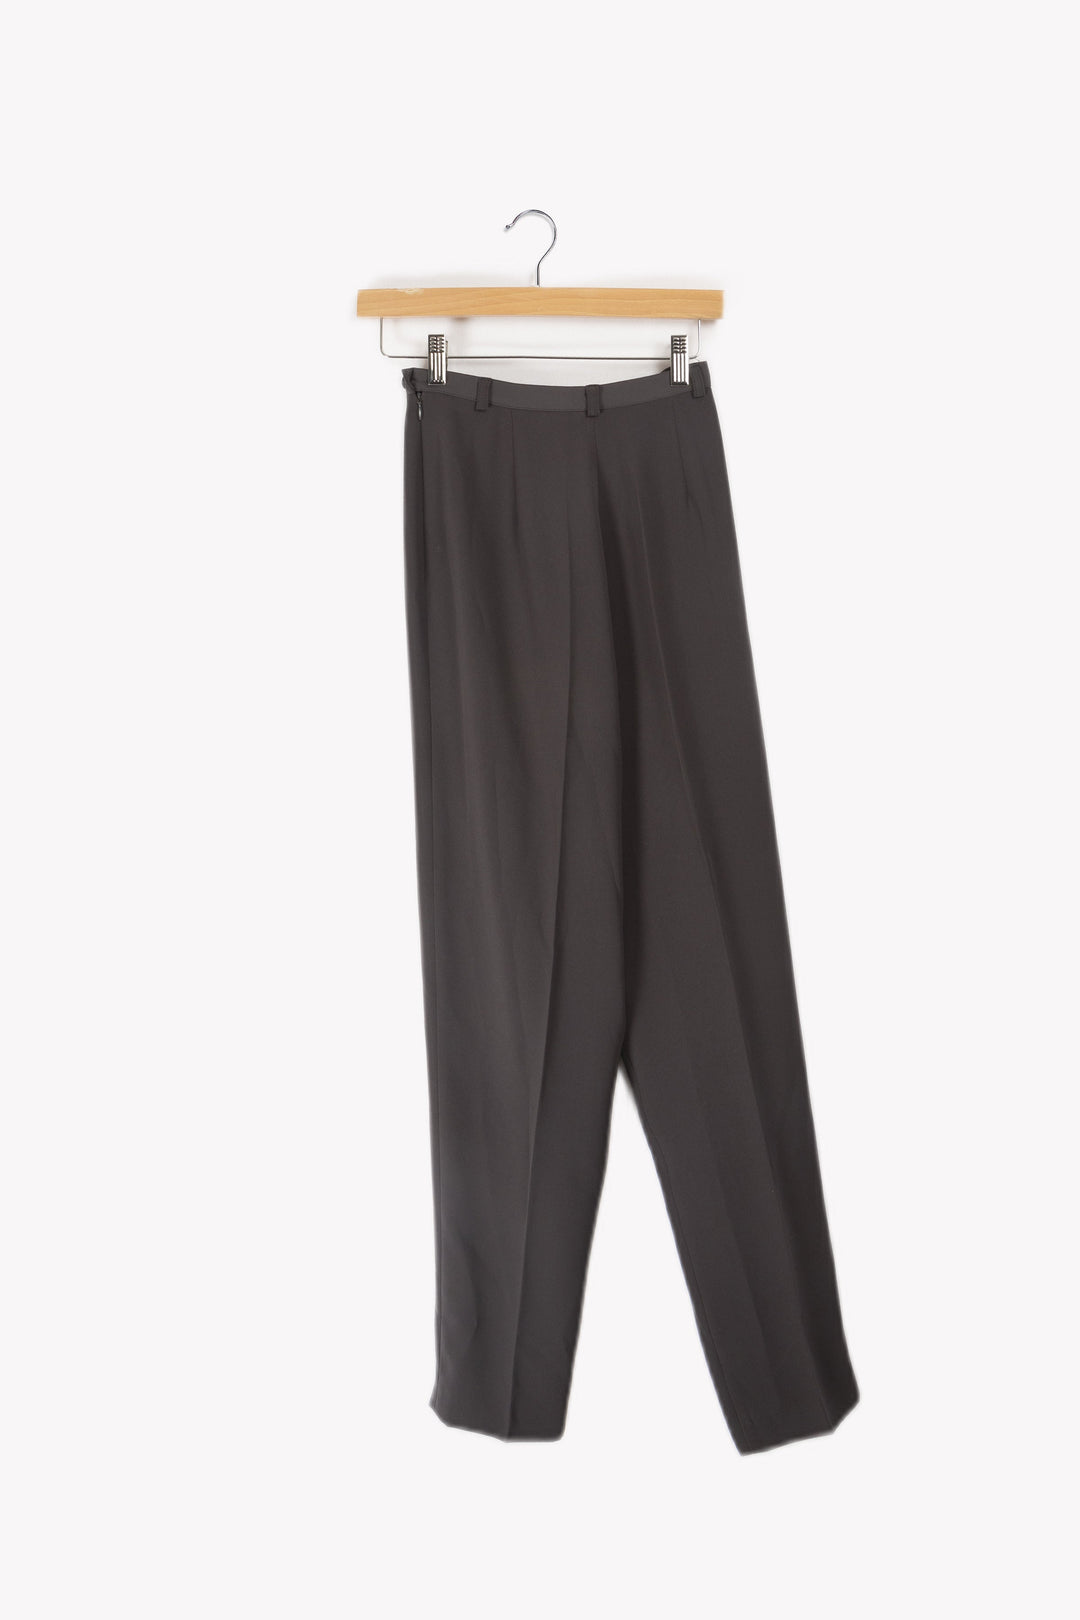 Gray brown pants - M/38